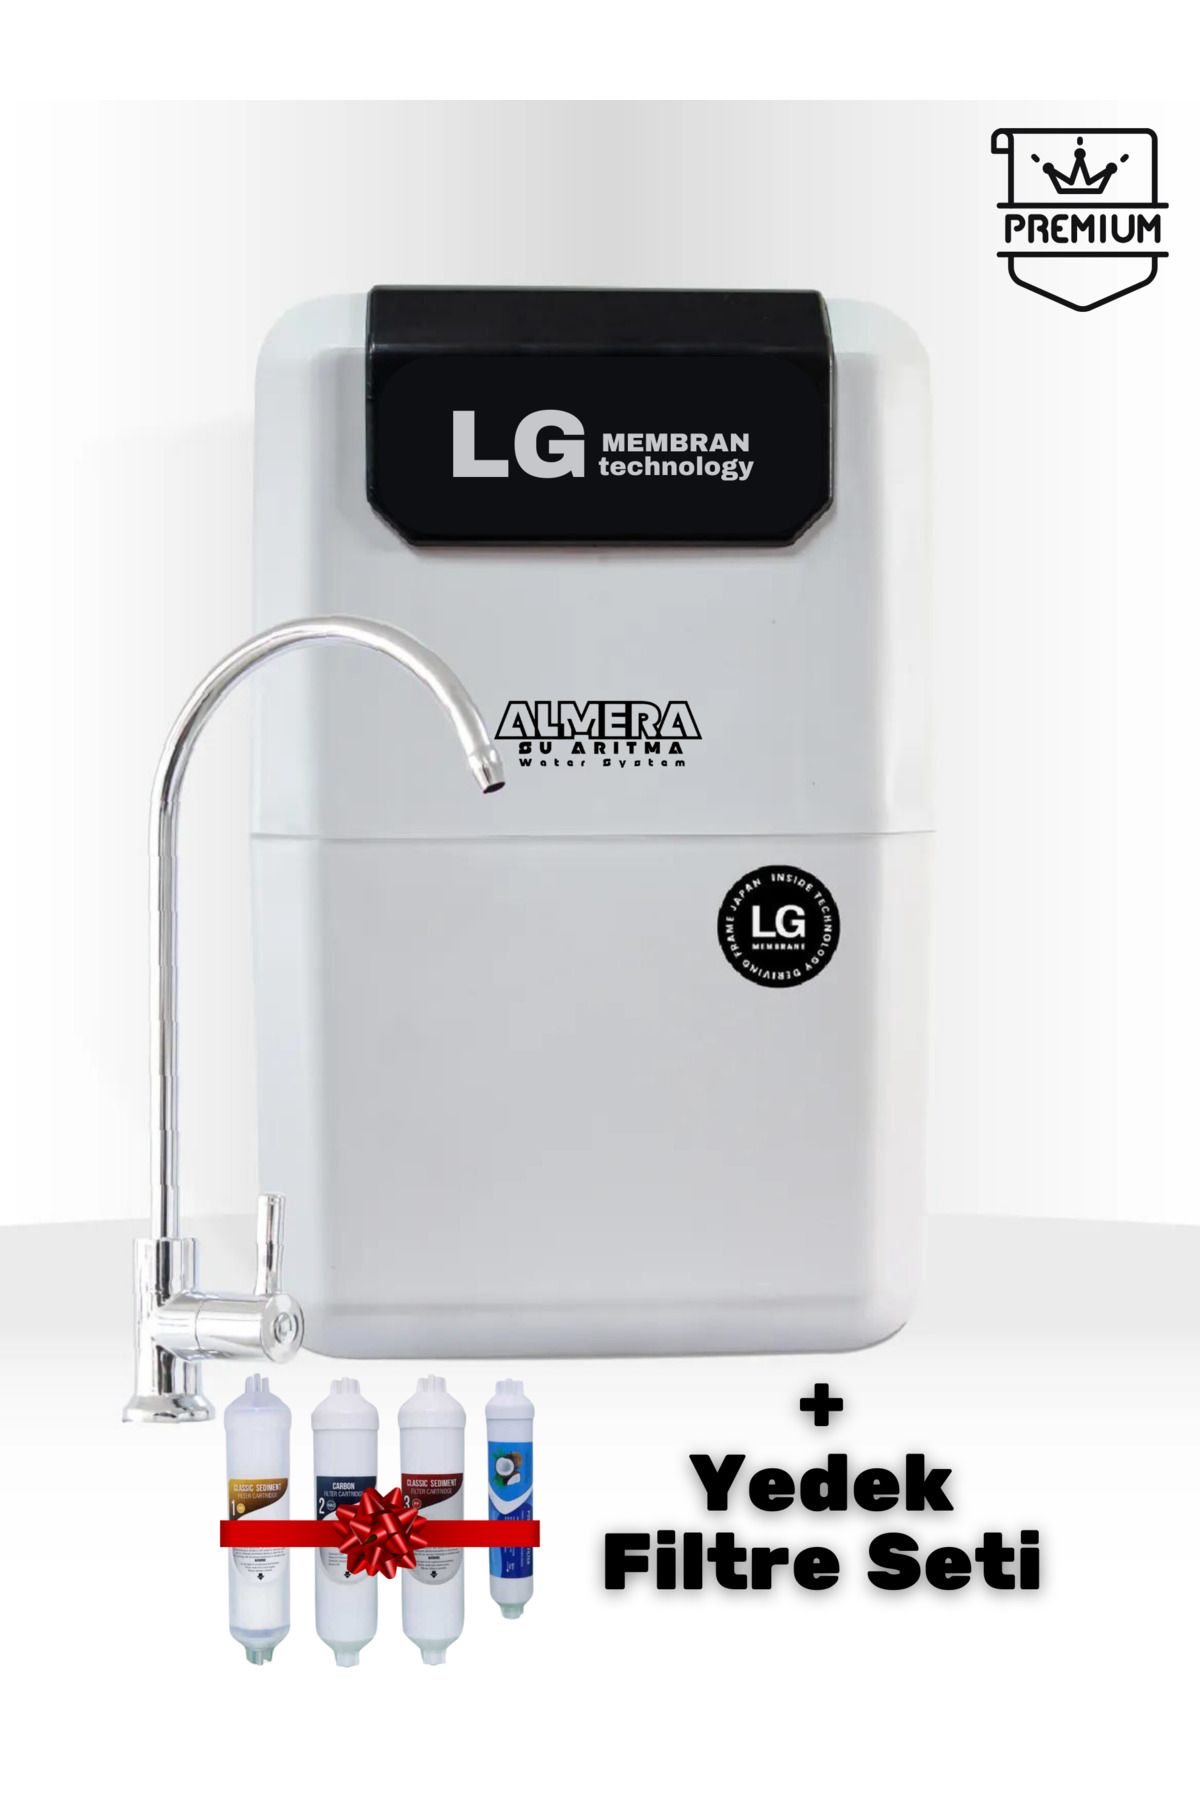 LG Chem Su Arıtma Cihazı Çelik Tanklı Membranlı Su Arıtma Cihazı Yedek Filtre Seti